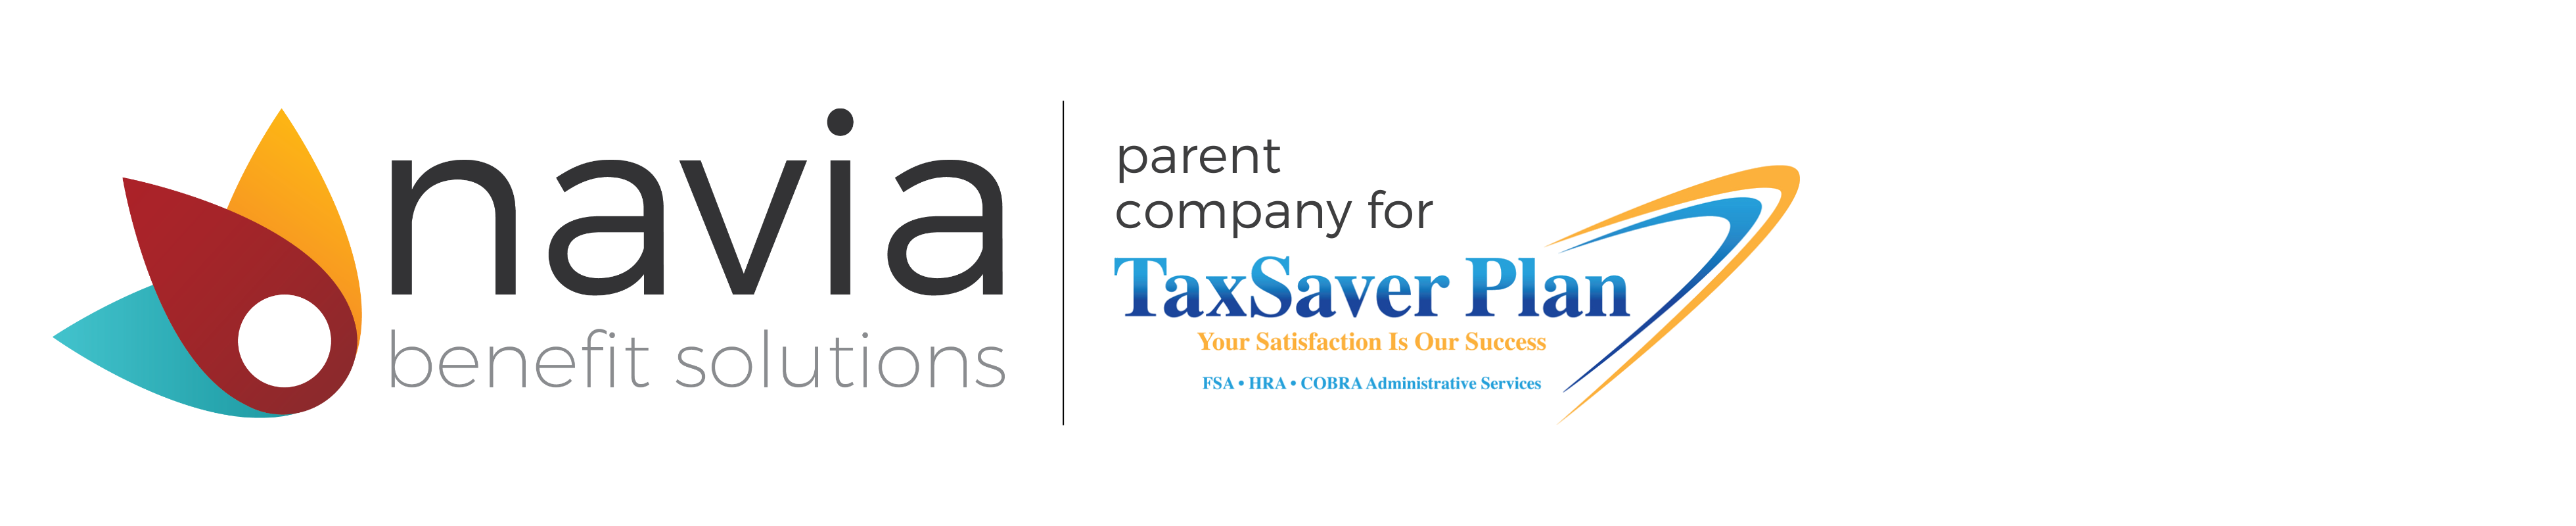 TaxSaver Plan